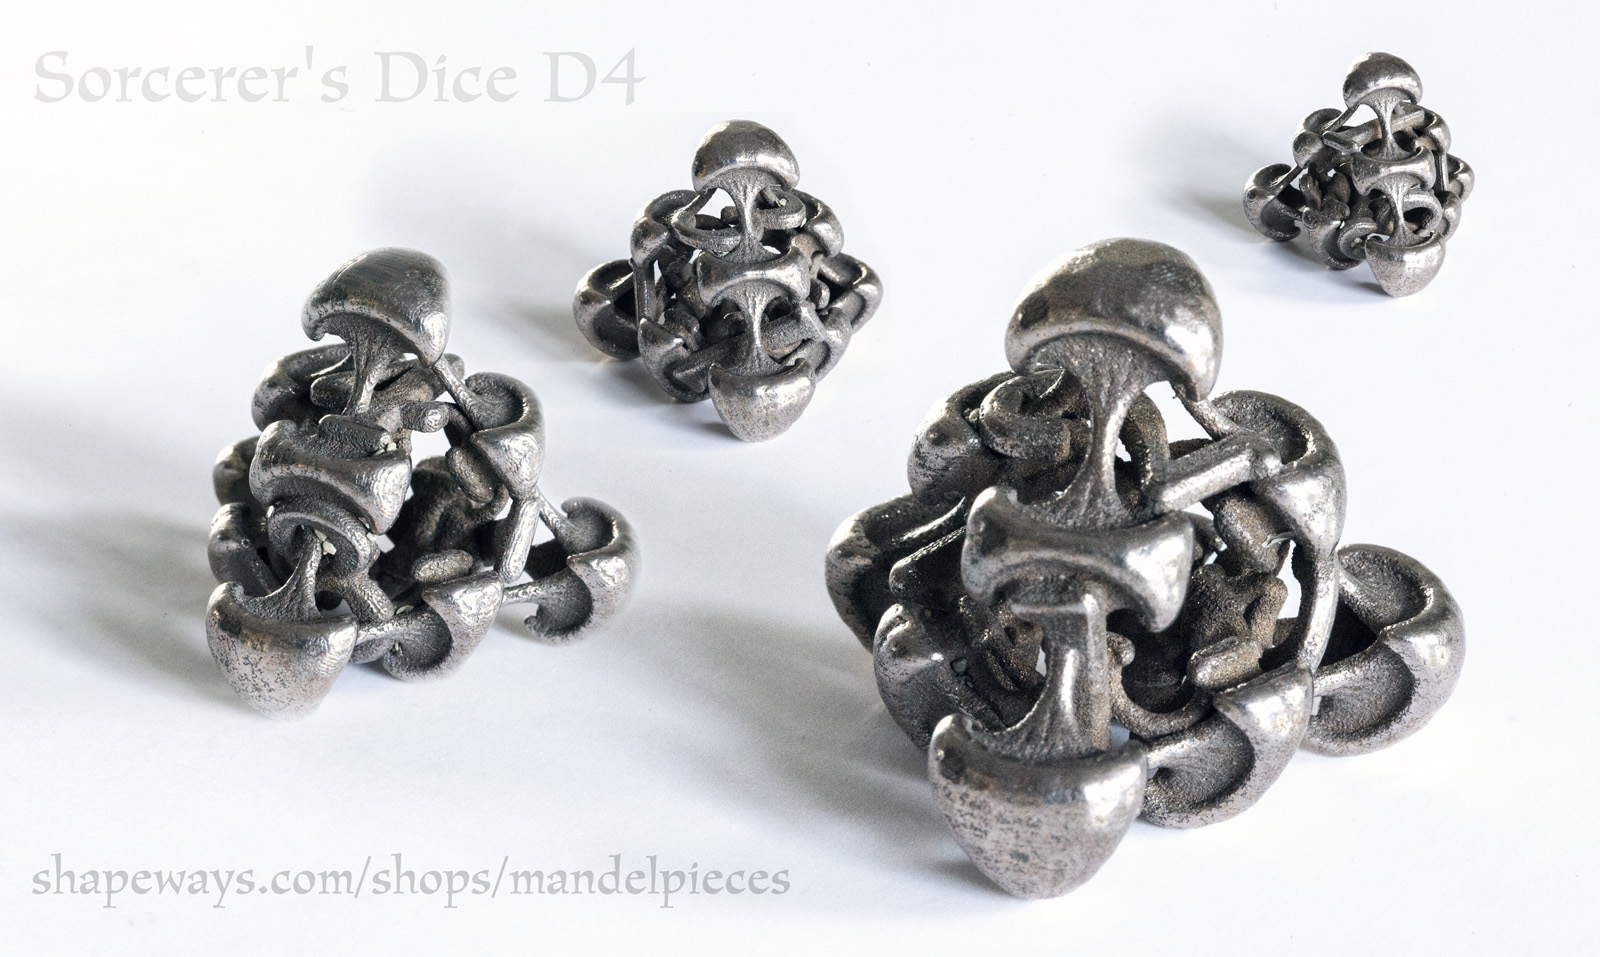 Sorcerer's Dice D4 - 3D printed in Steel